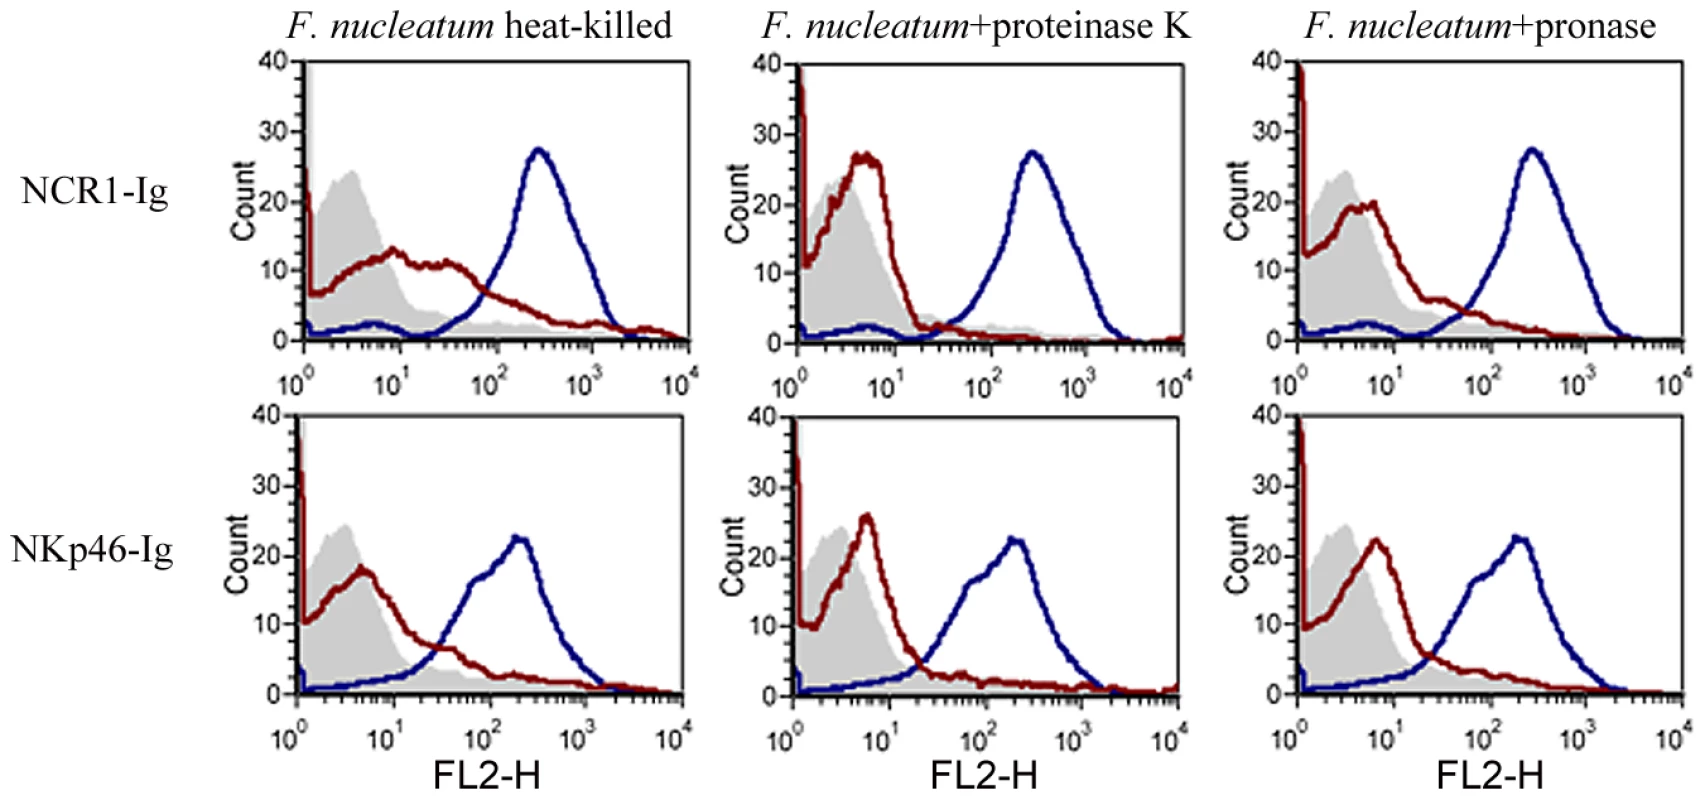 The <i>F. nucleatum</i> ligand is sensitive to heat, proteinase K and pronase treatment.